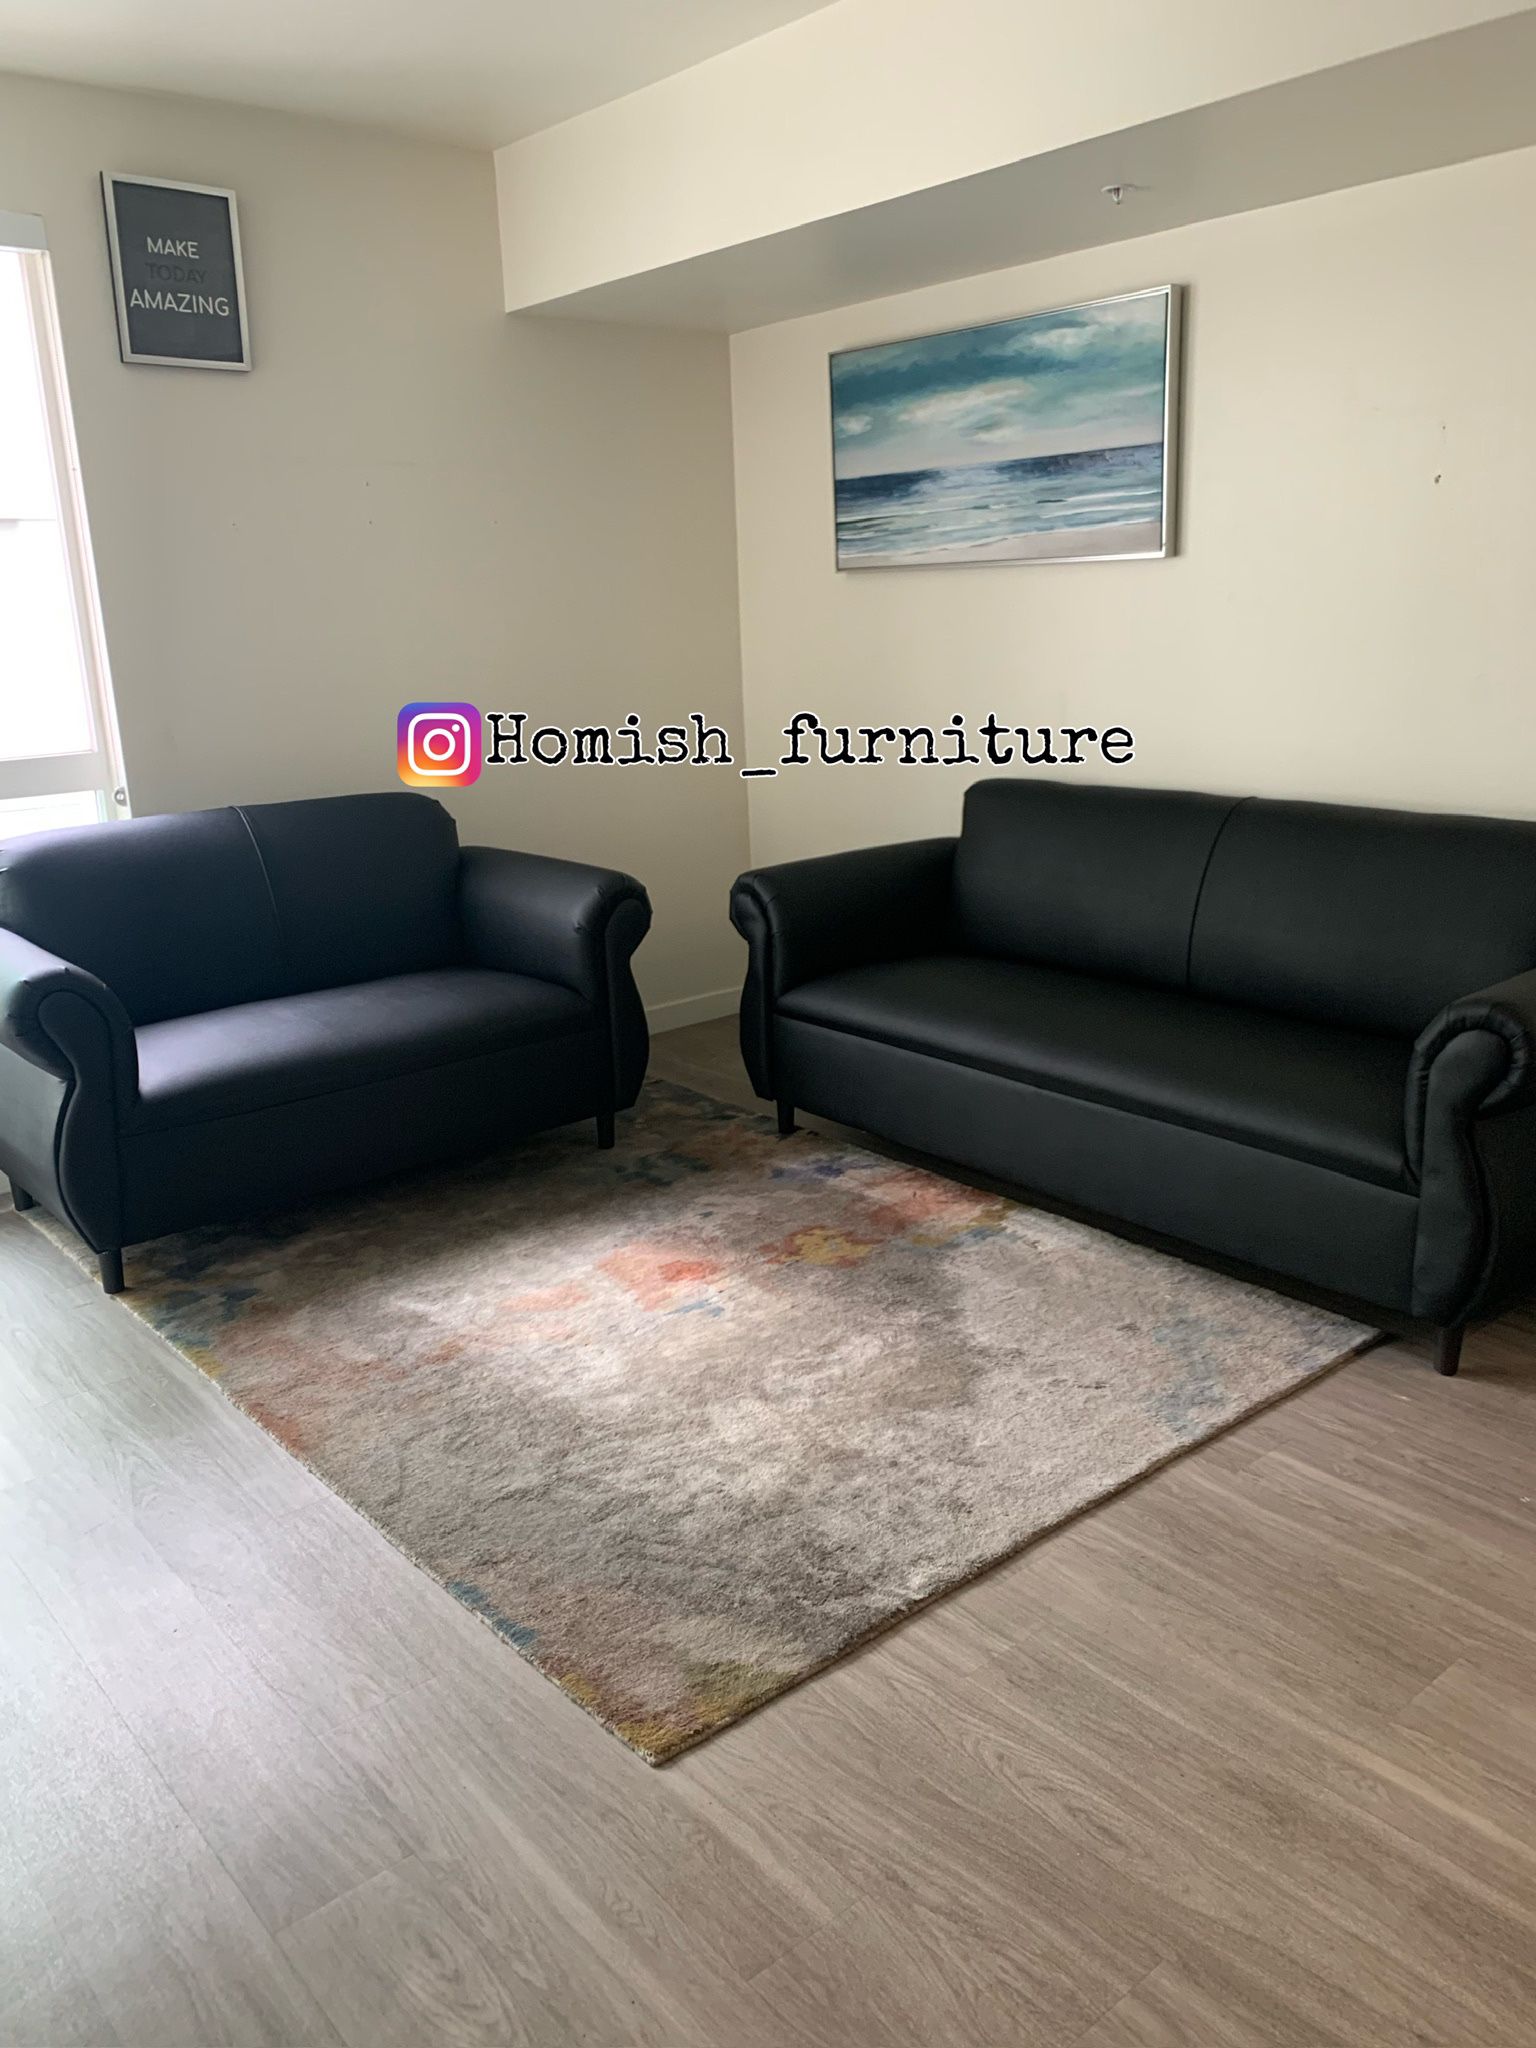 $499 Brand New Sofa And Loveseat Set (read description)